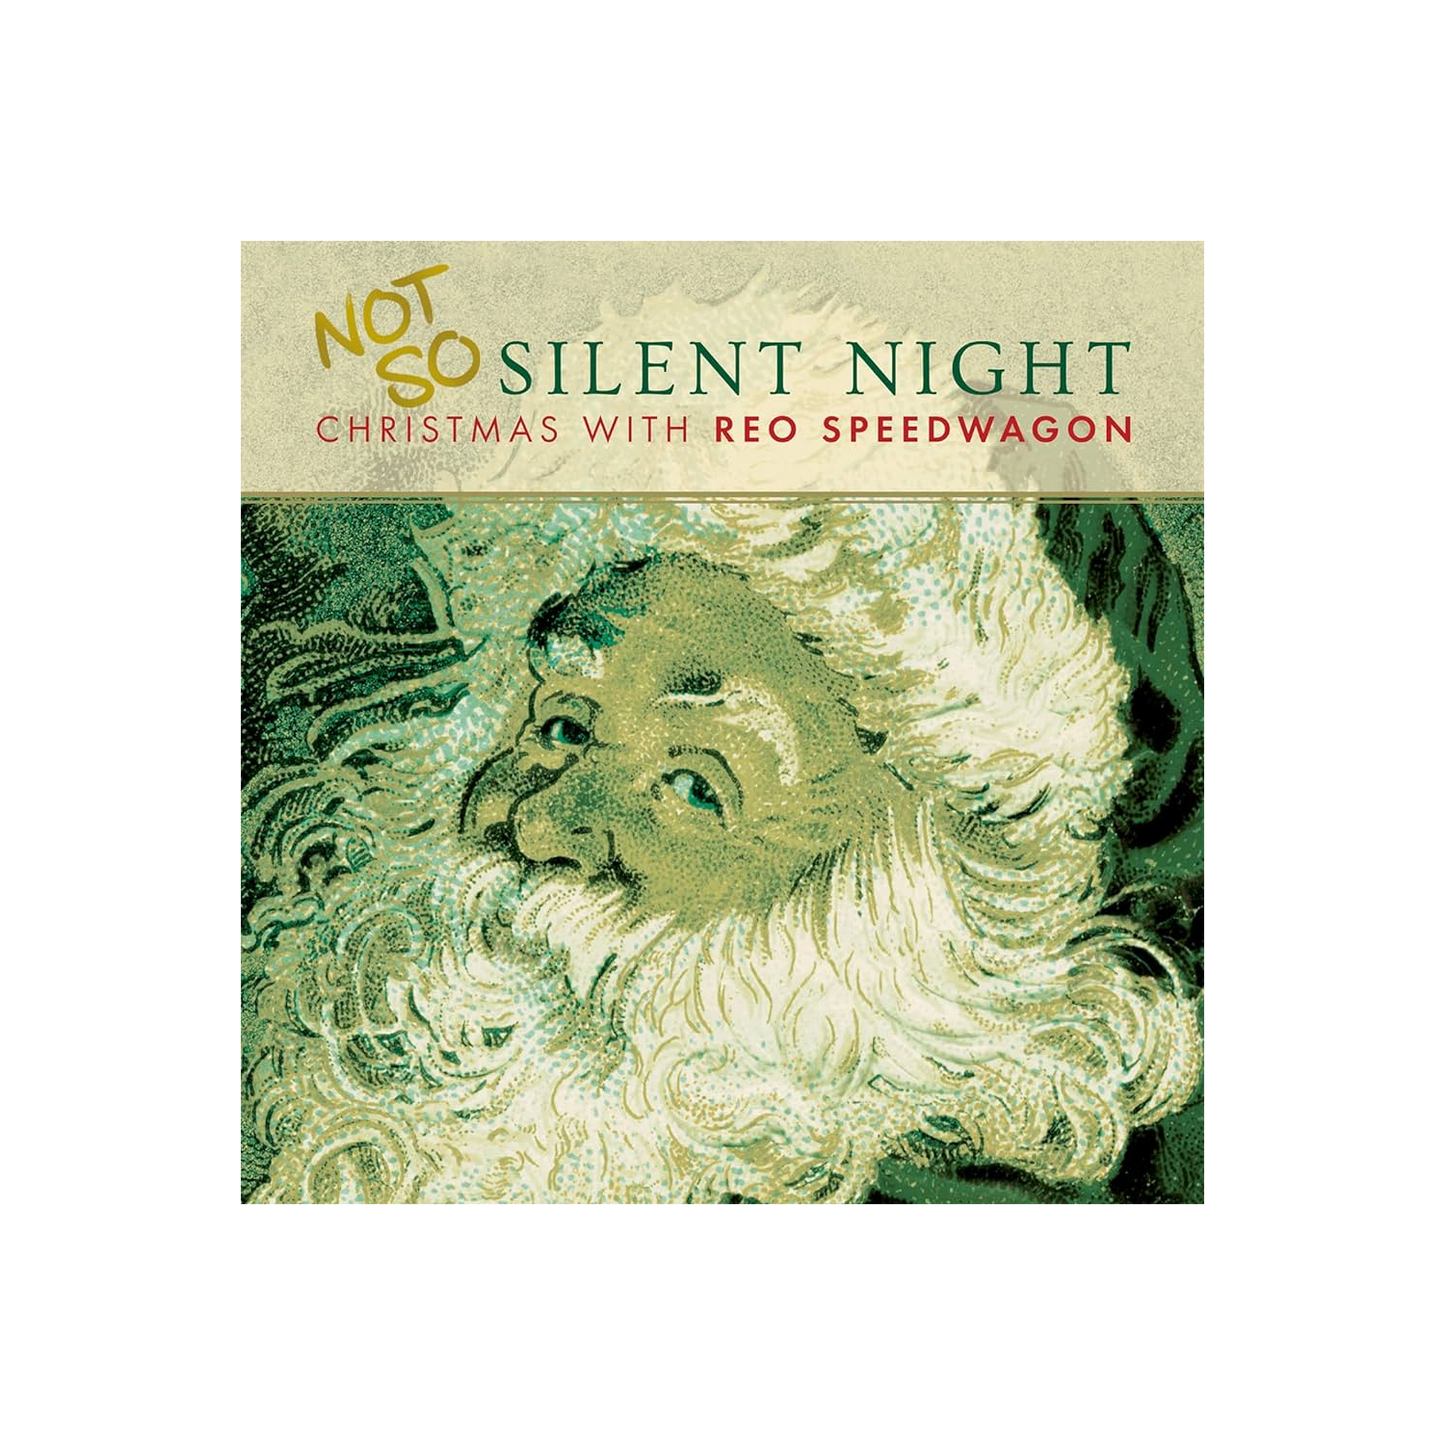 Christmas with REO Speedwagon "Not So Silent Night" Vinyl